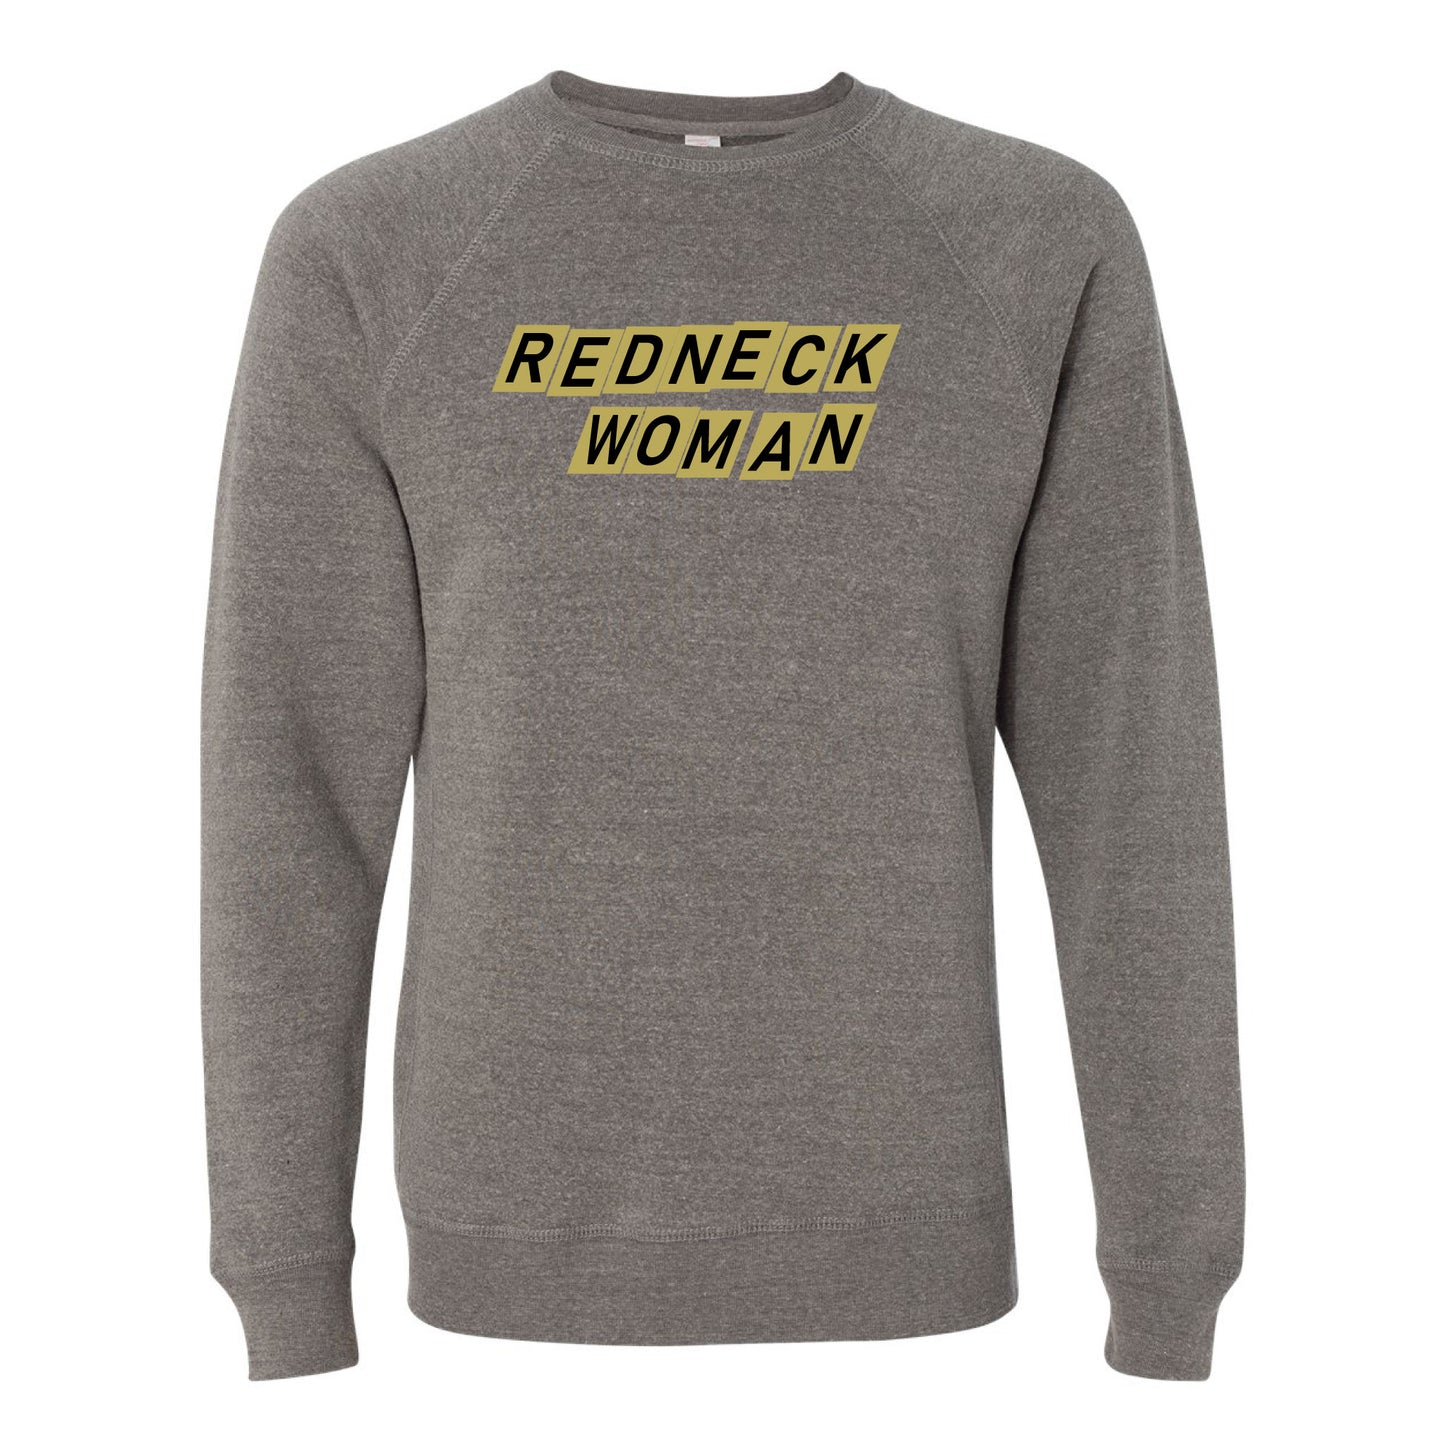 Redneck Woman Crewneck Sweatshirt